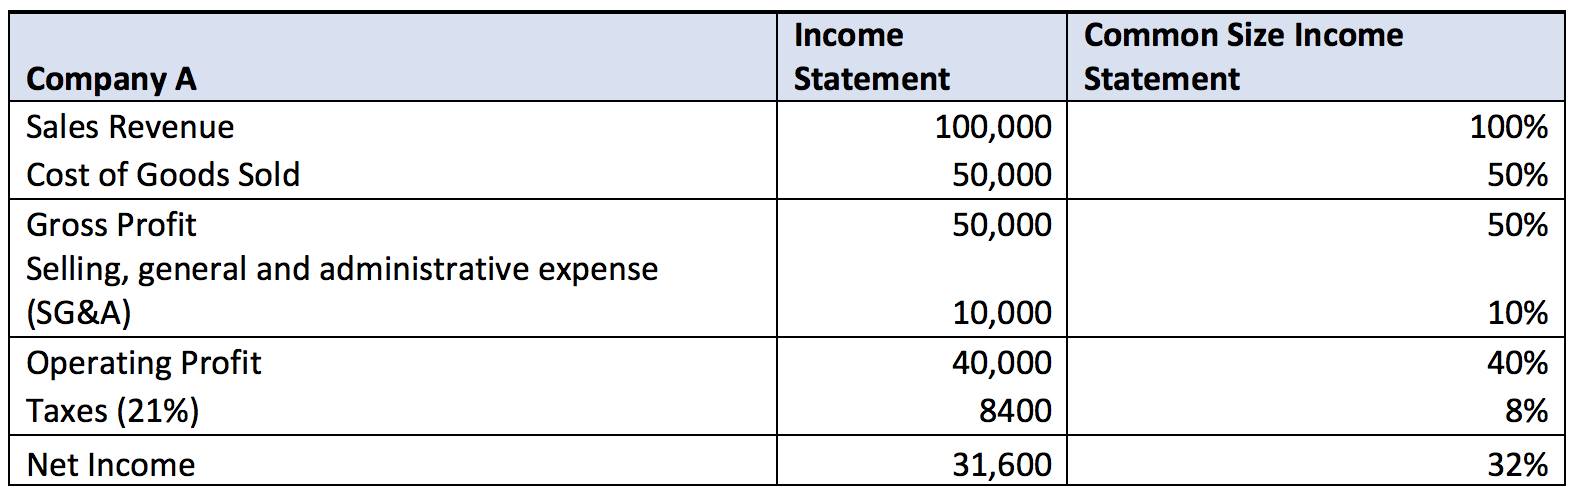 Common Size Income Statement and Quarterly Income Statement Template